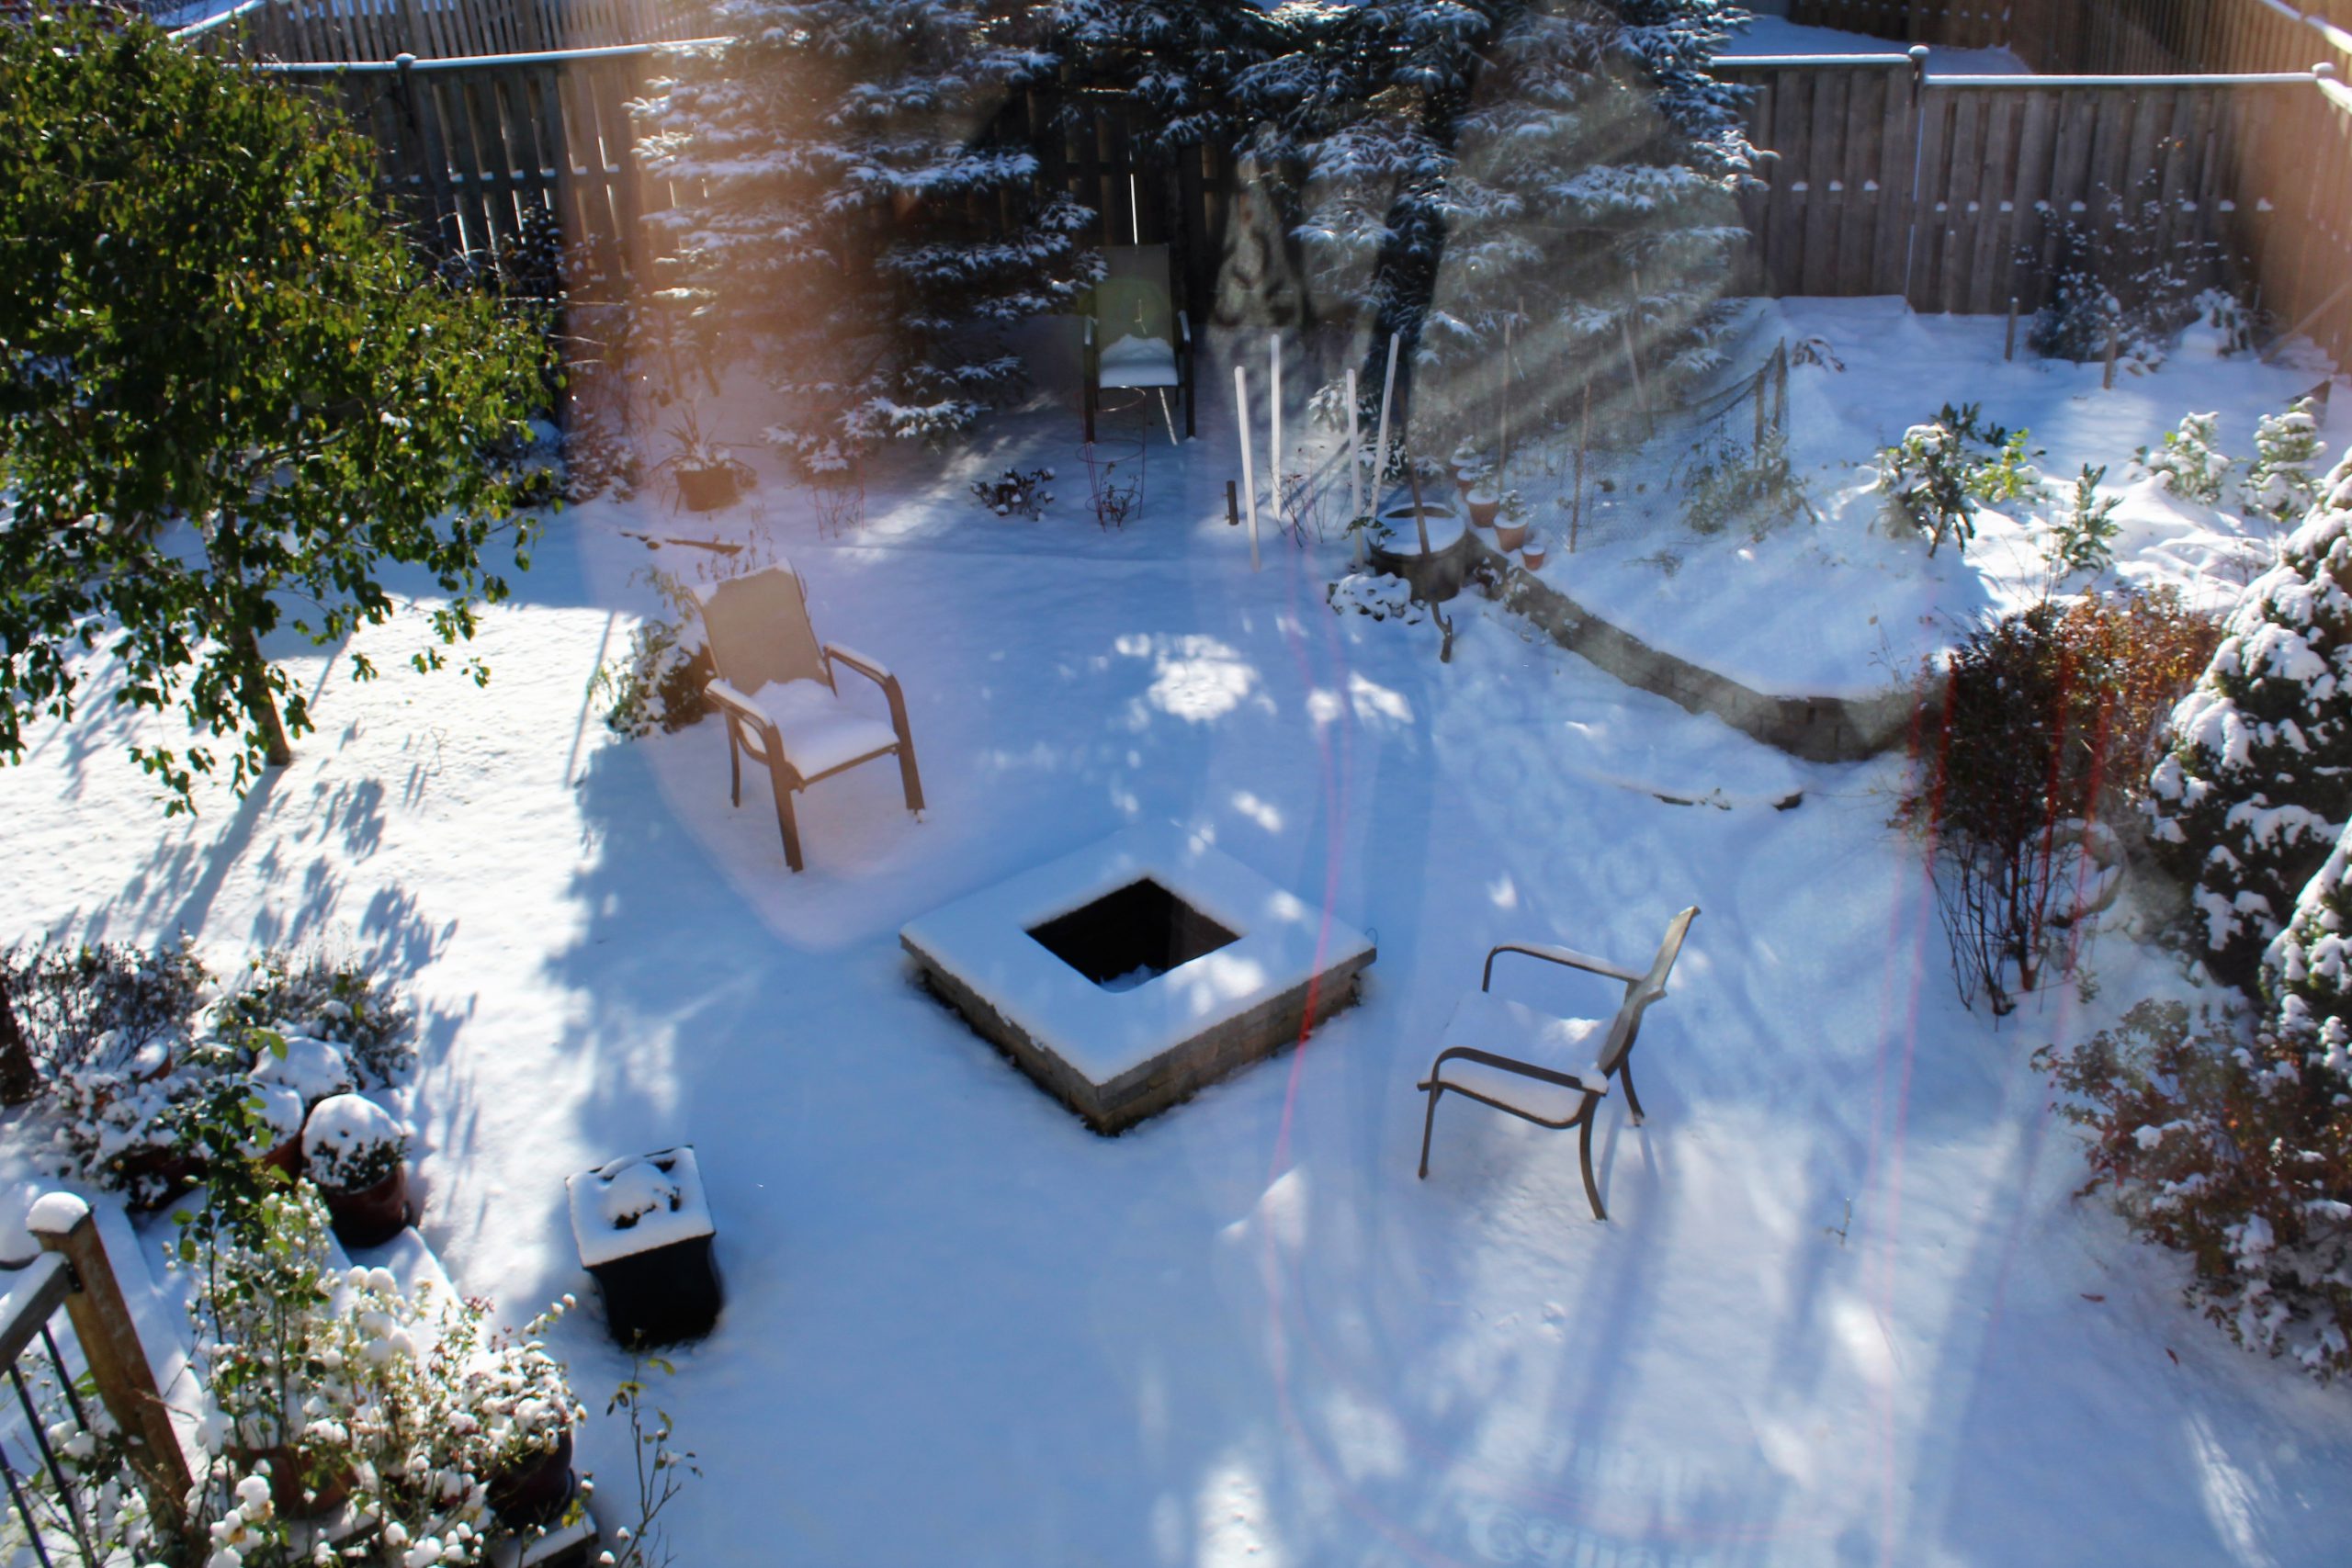 Winter backyard photo